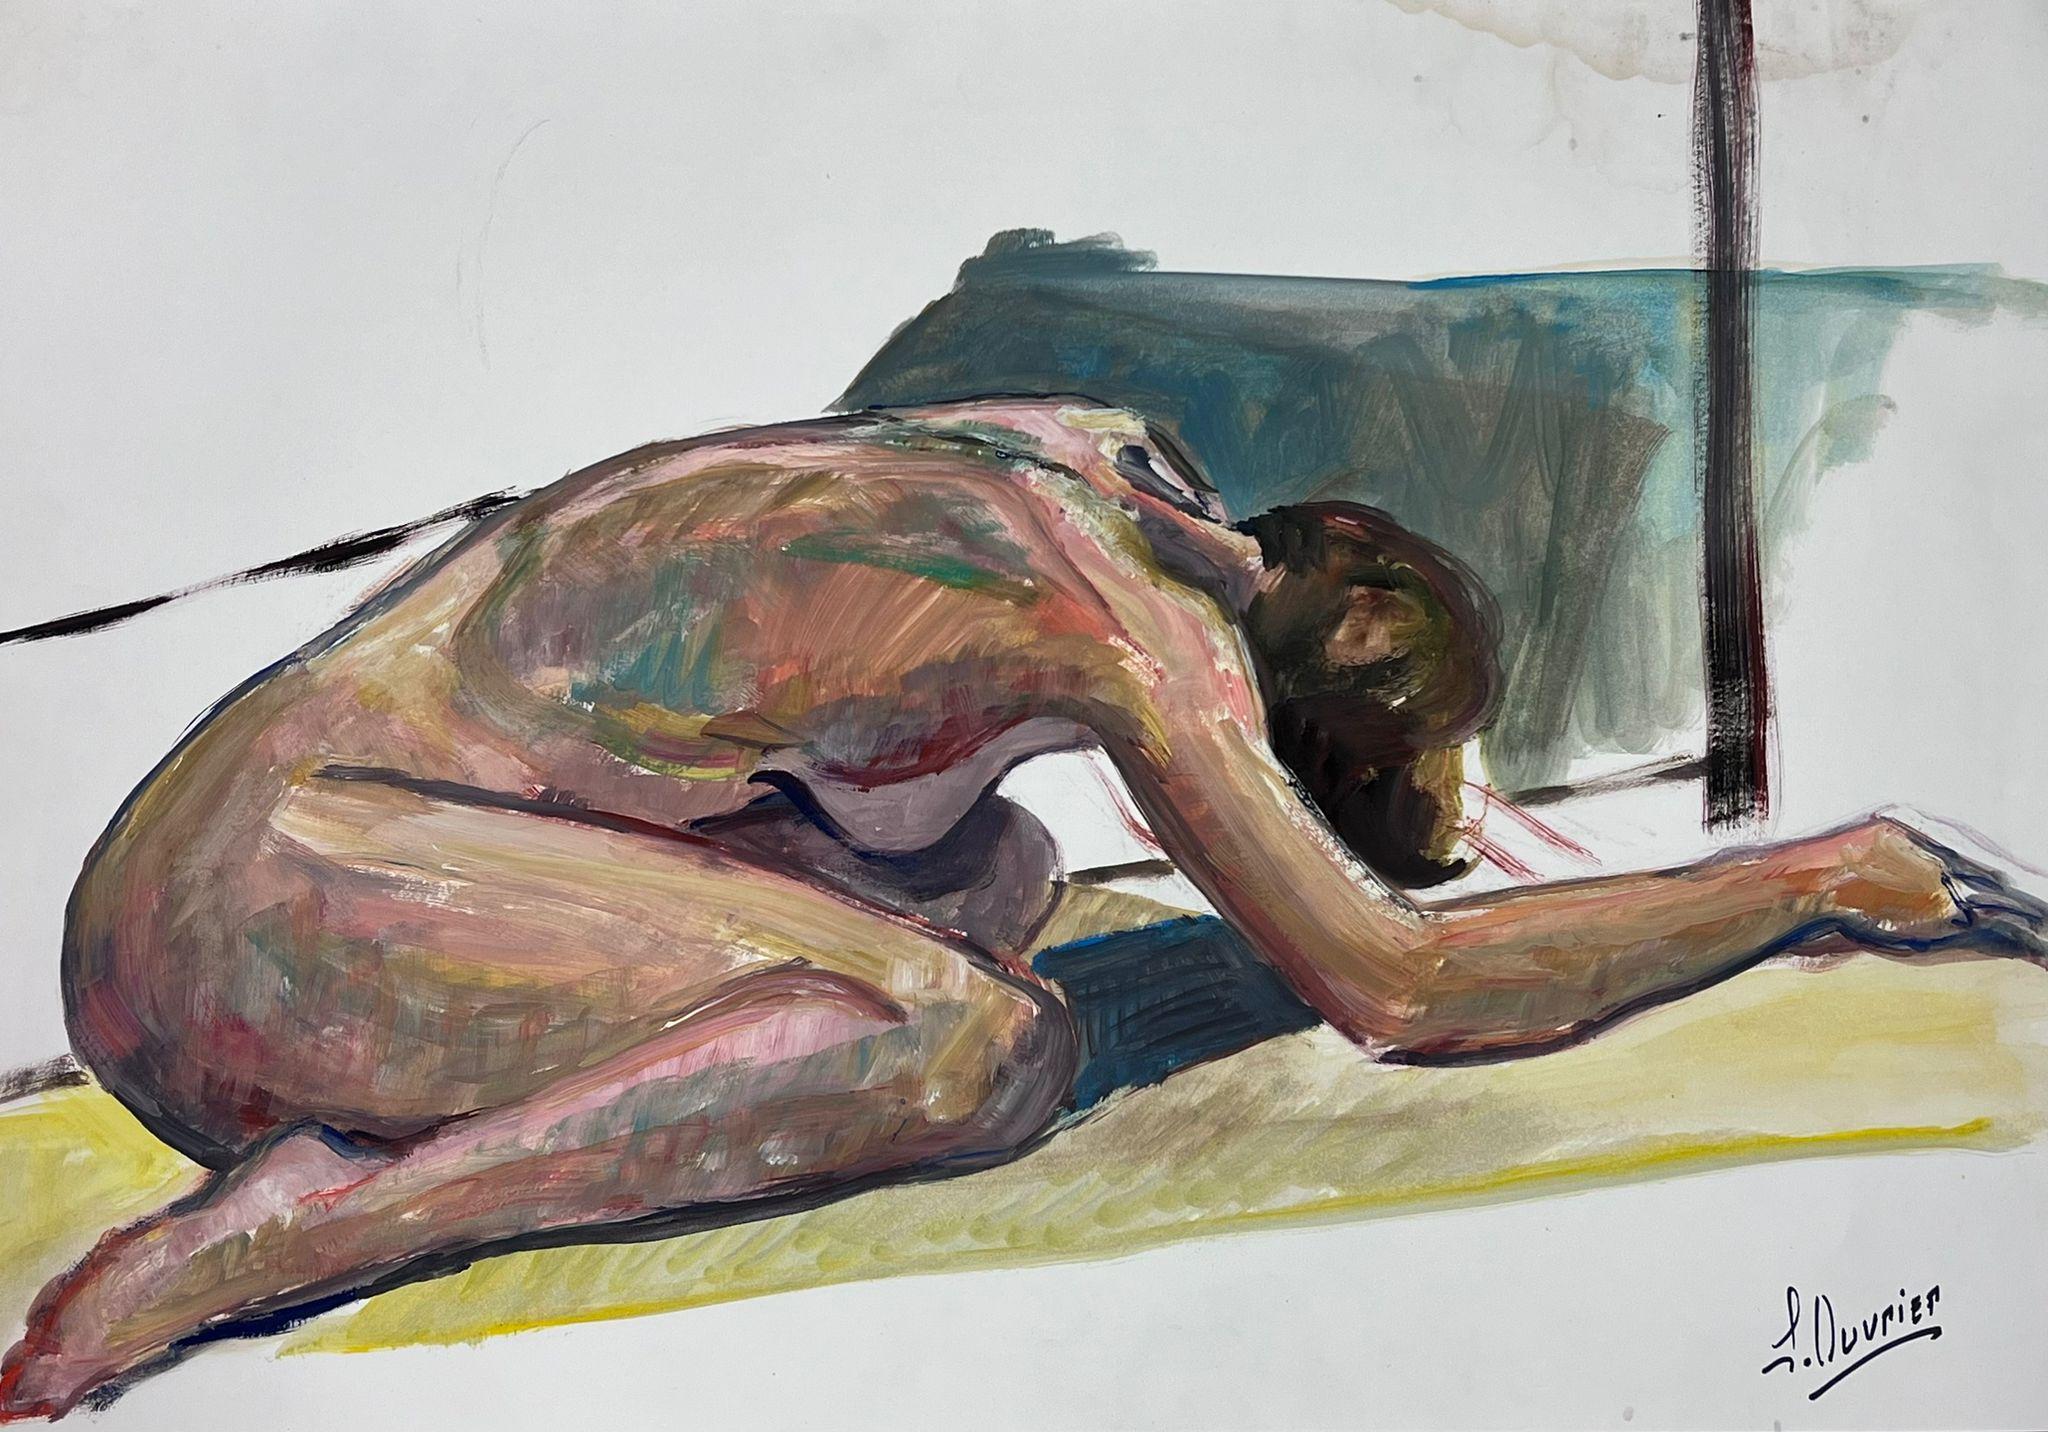 Nude Painting French Modernist - Robe de femme nue des années 1970 Collection Provence moderniste française